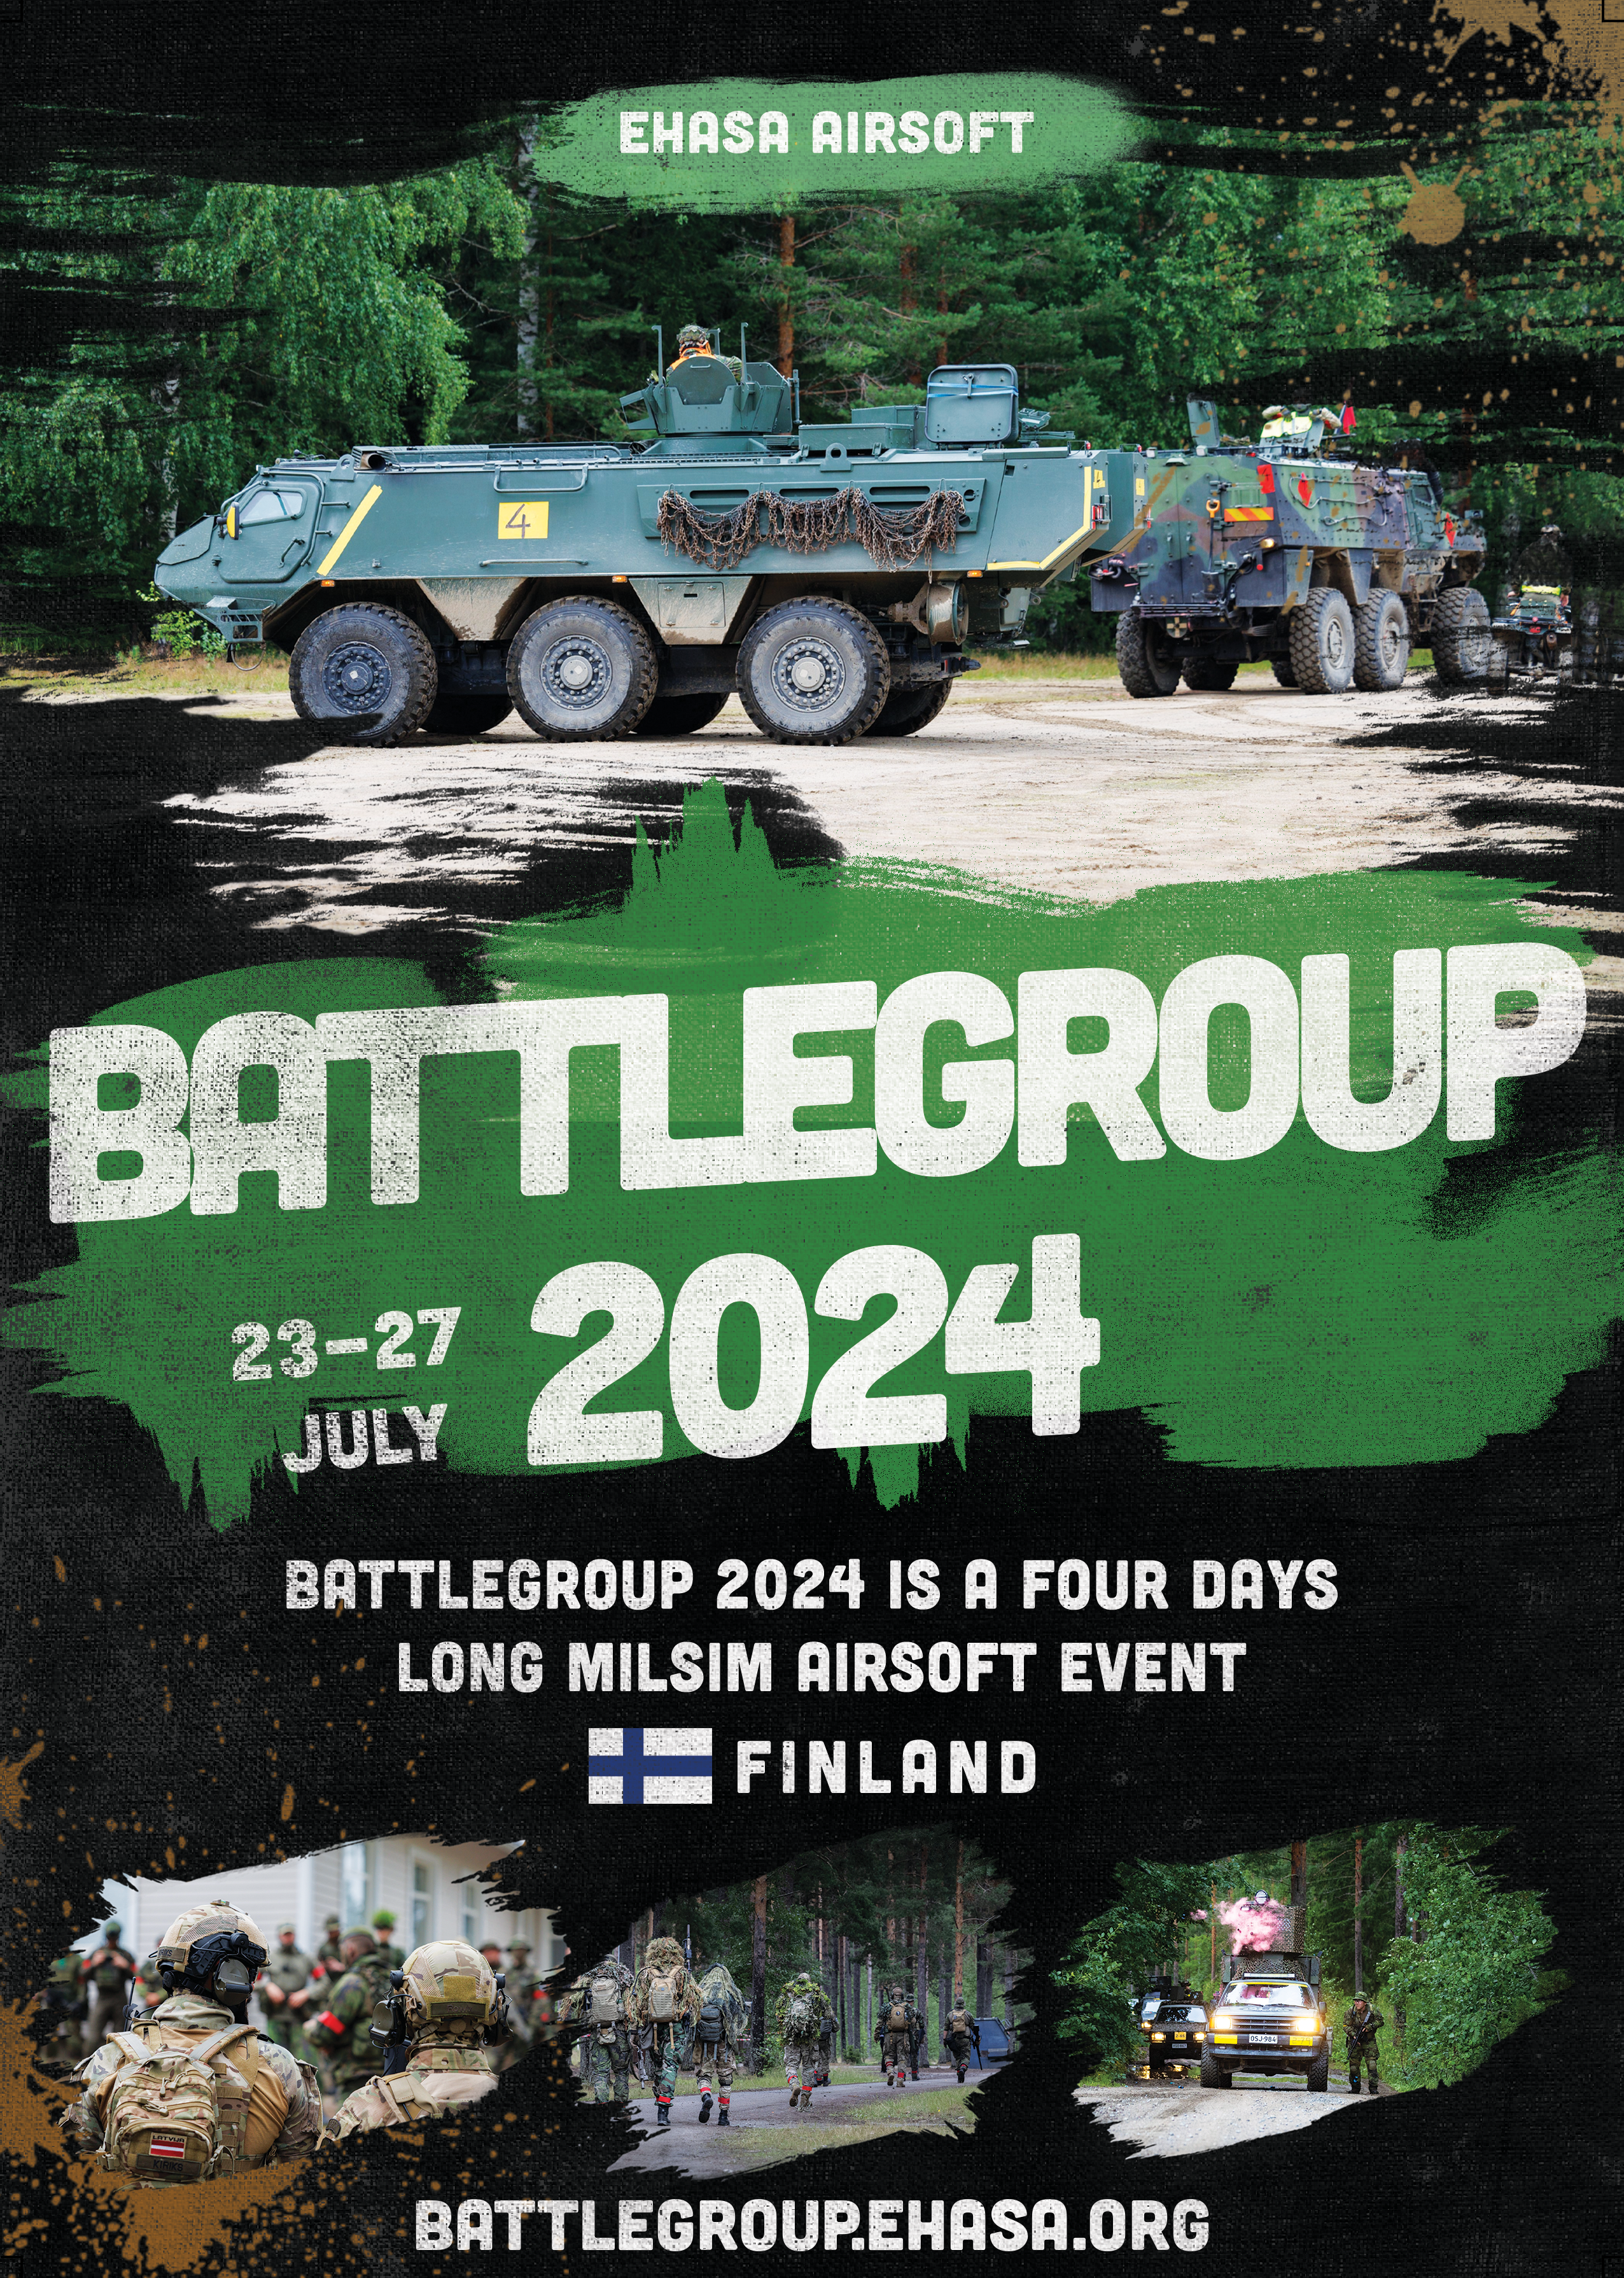 Battlegroup 2024 poster released